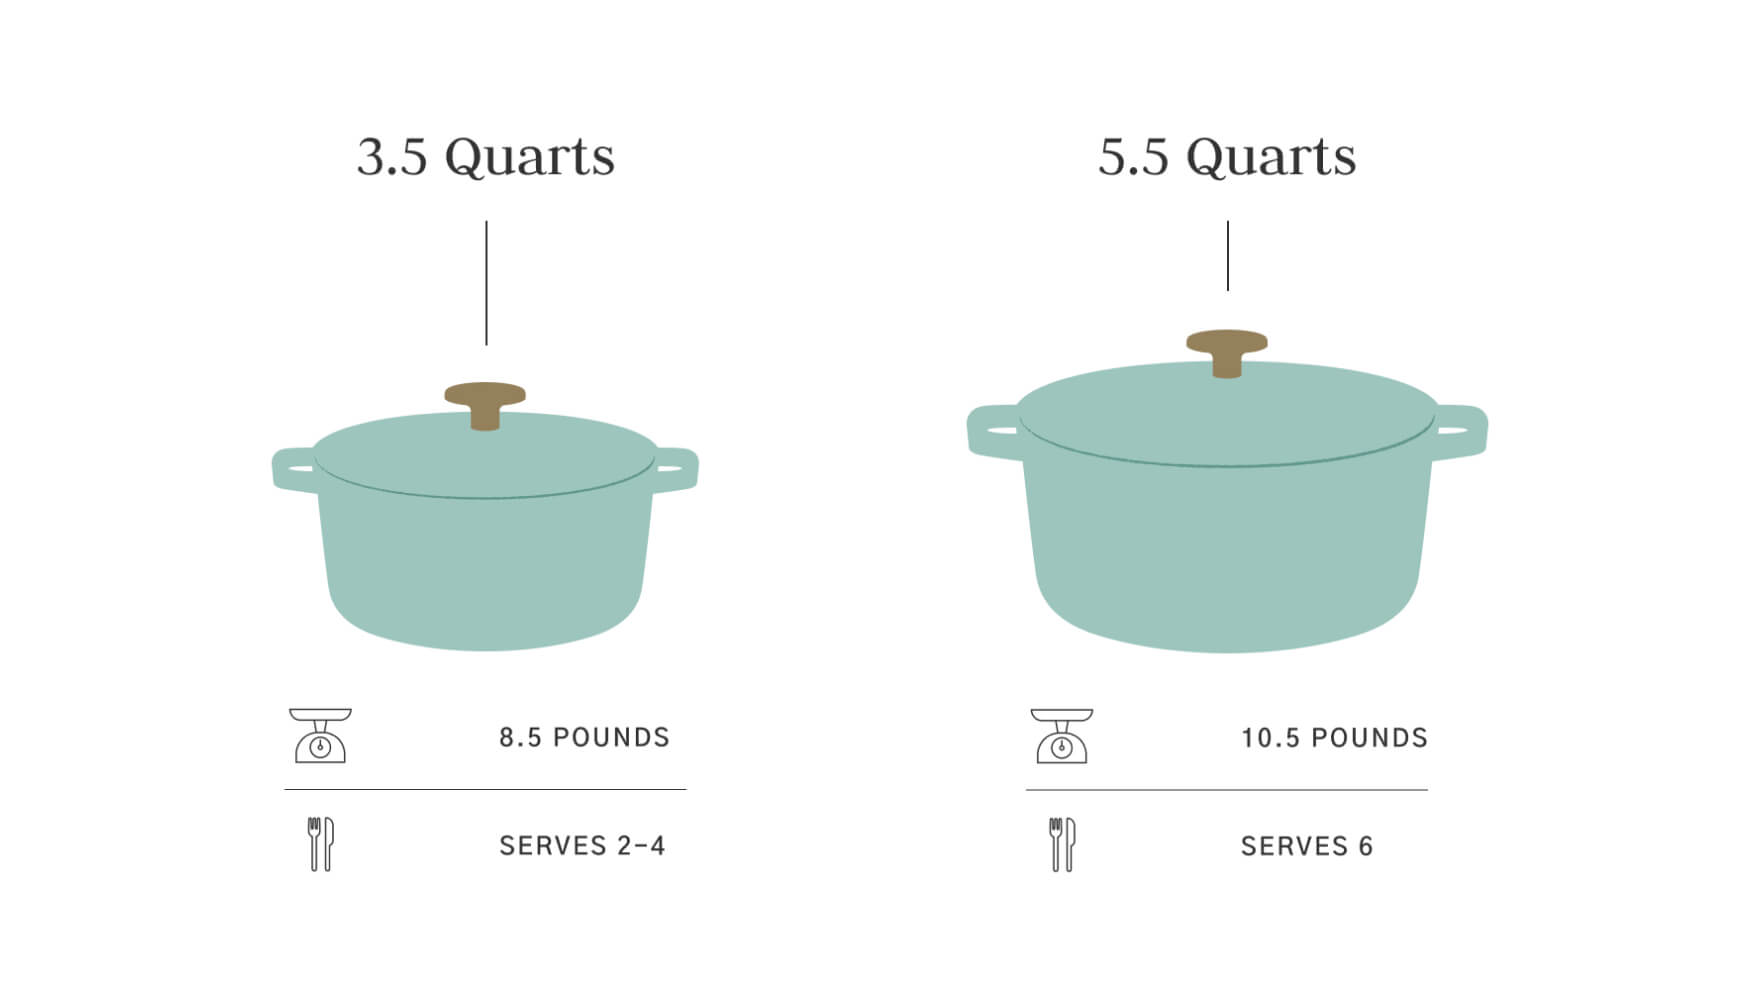 Dutch Oven vs. Crock Pot: Which Is Better?